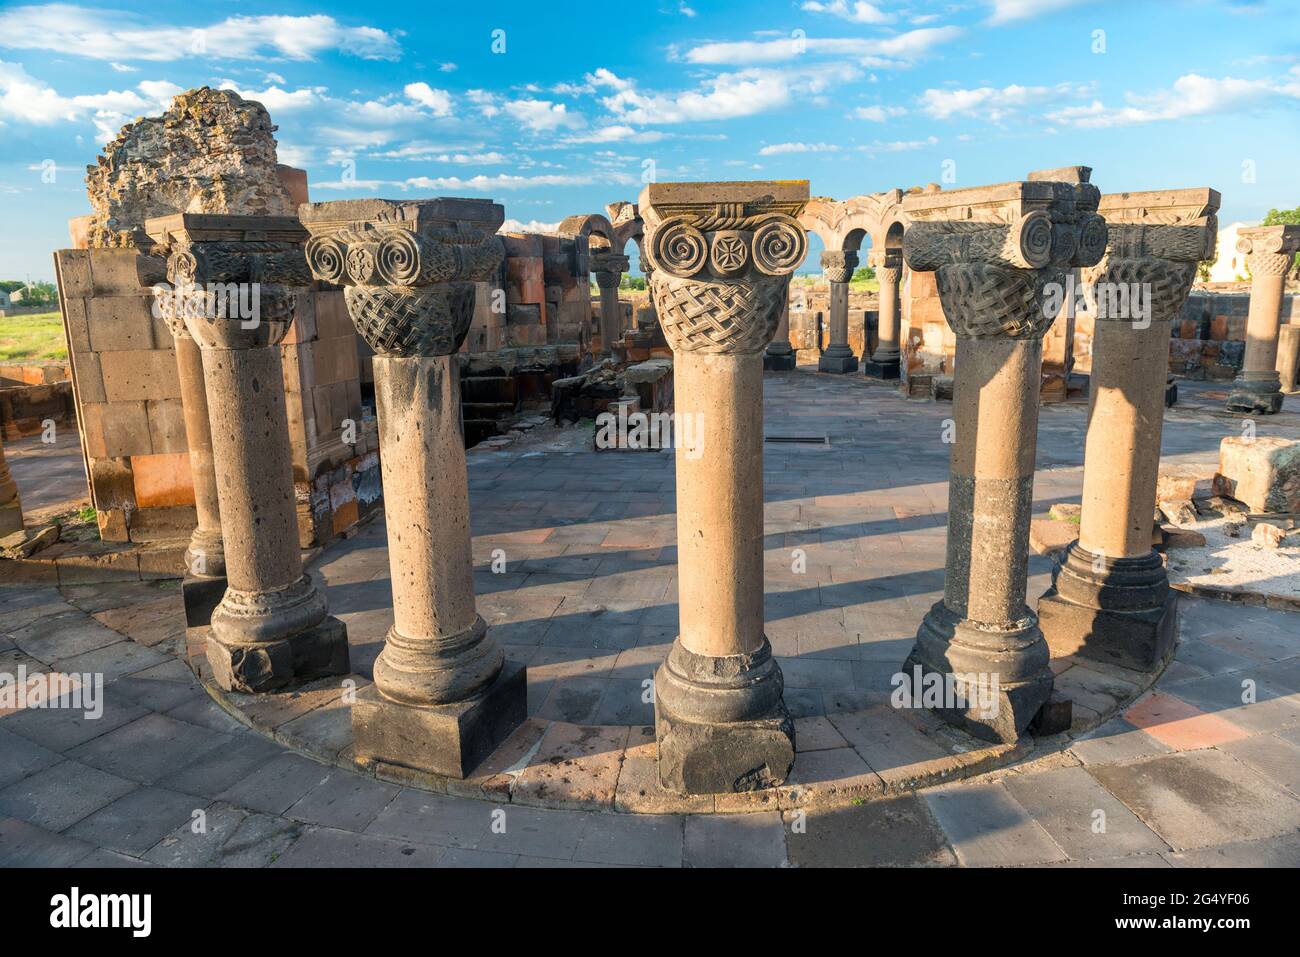 the ruins and columns of the ancient Zvartnots temple, a landmark of Armenia Stock Photo